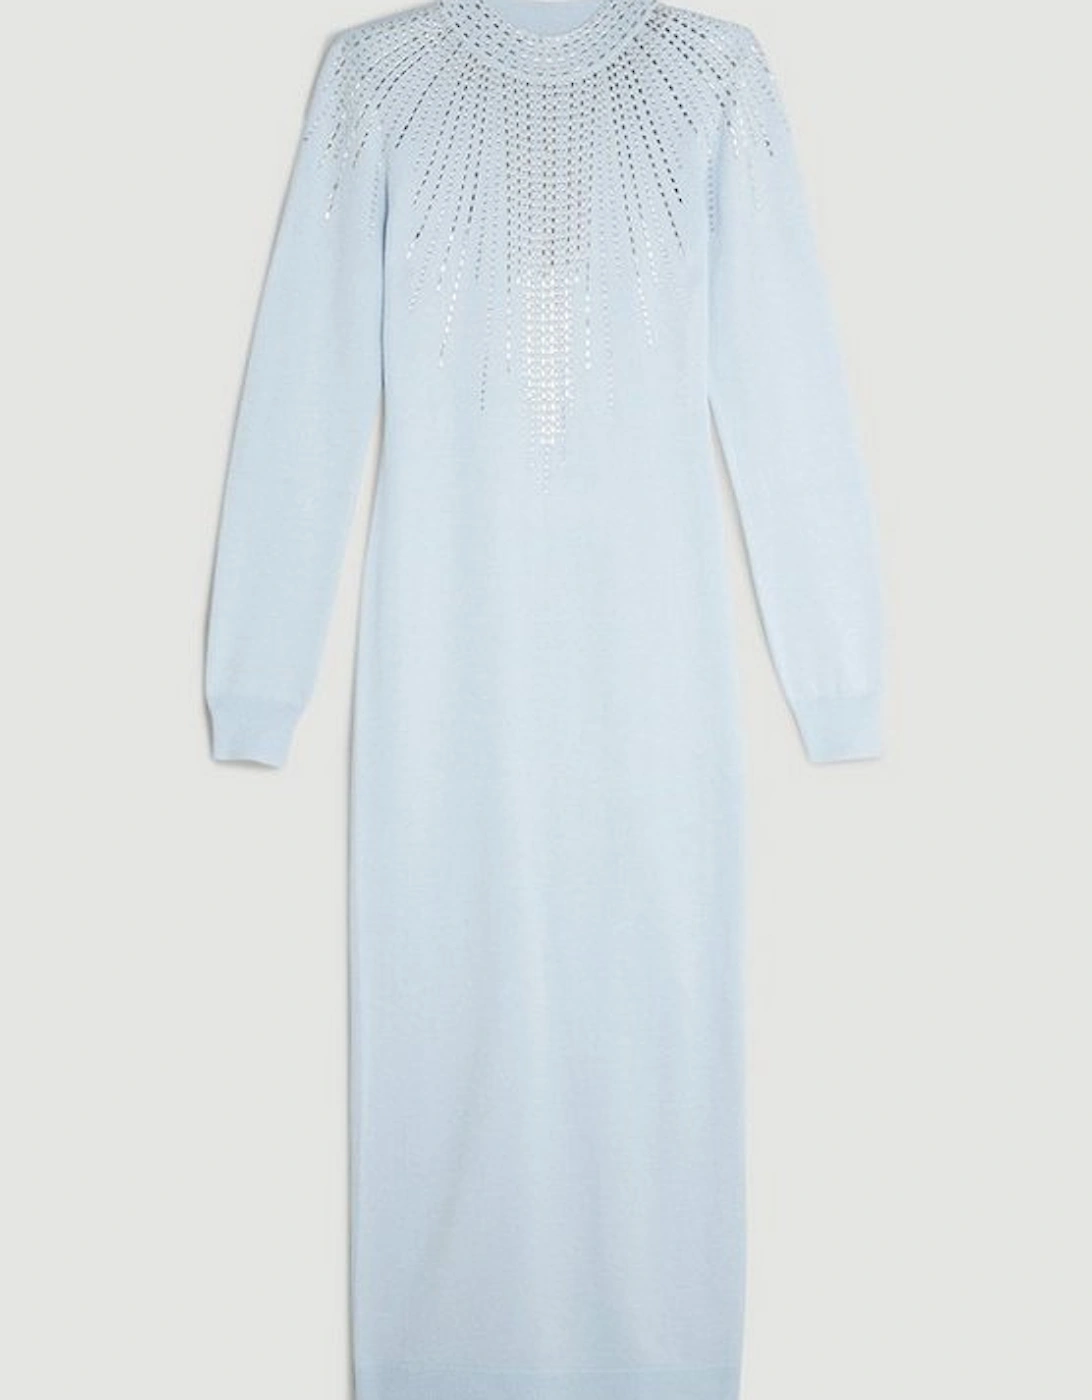 Embellished Knit Midi Dress